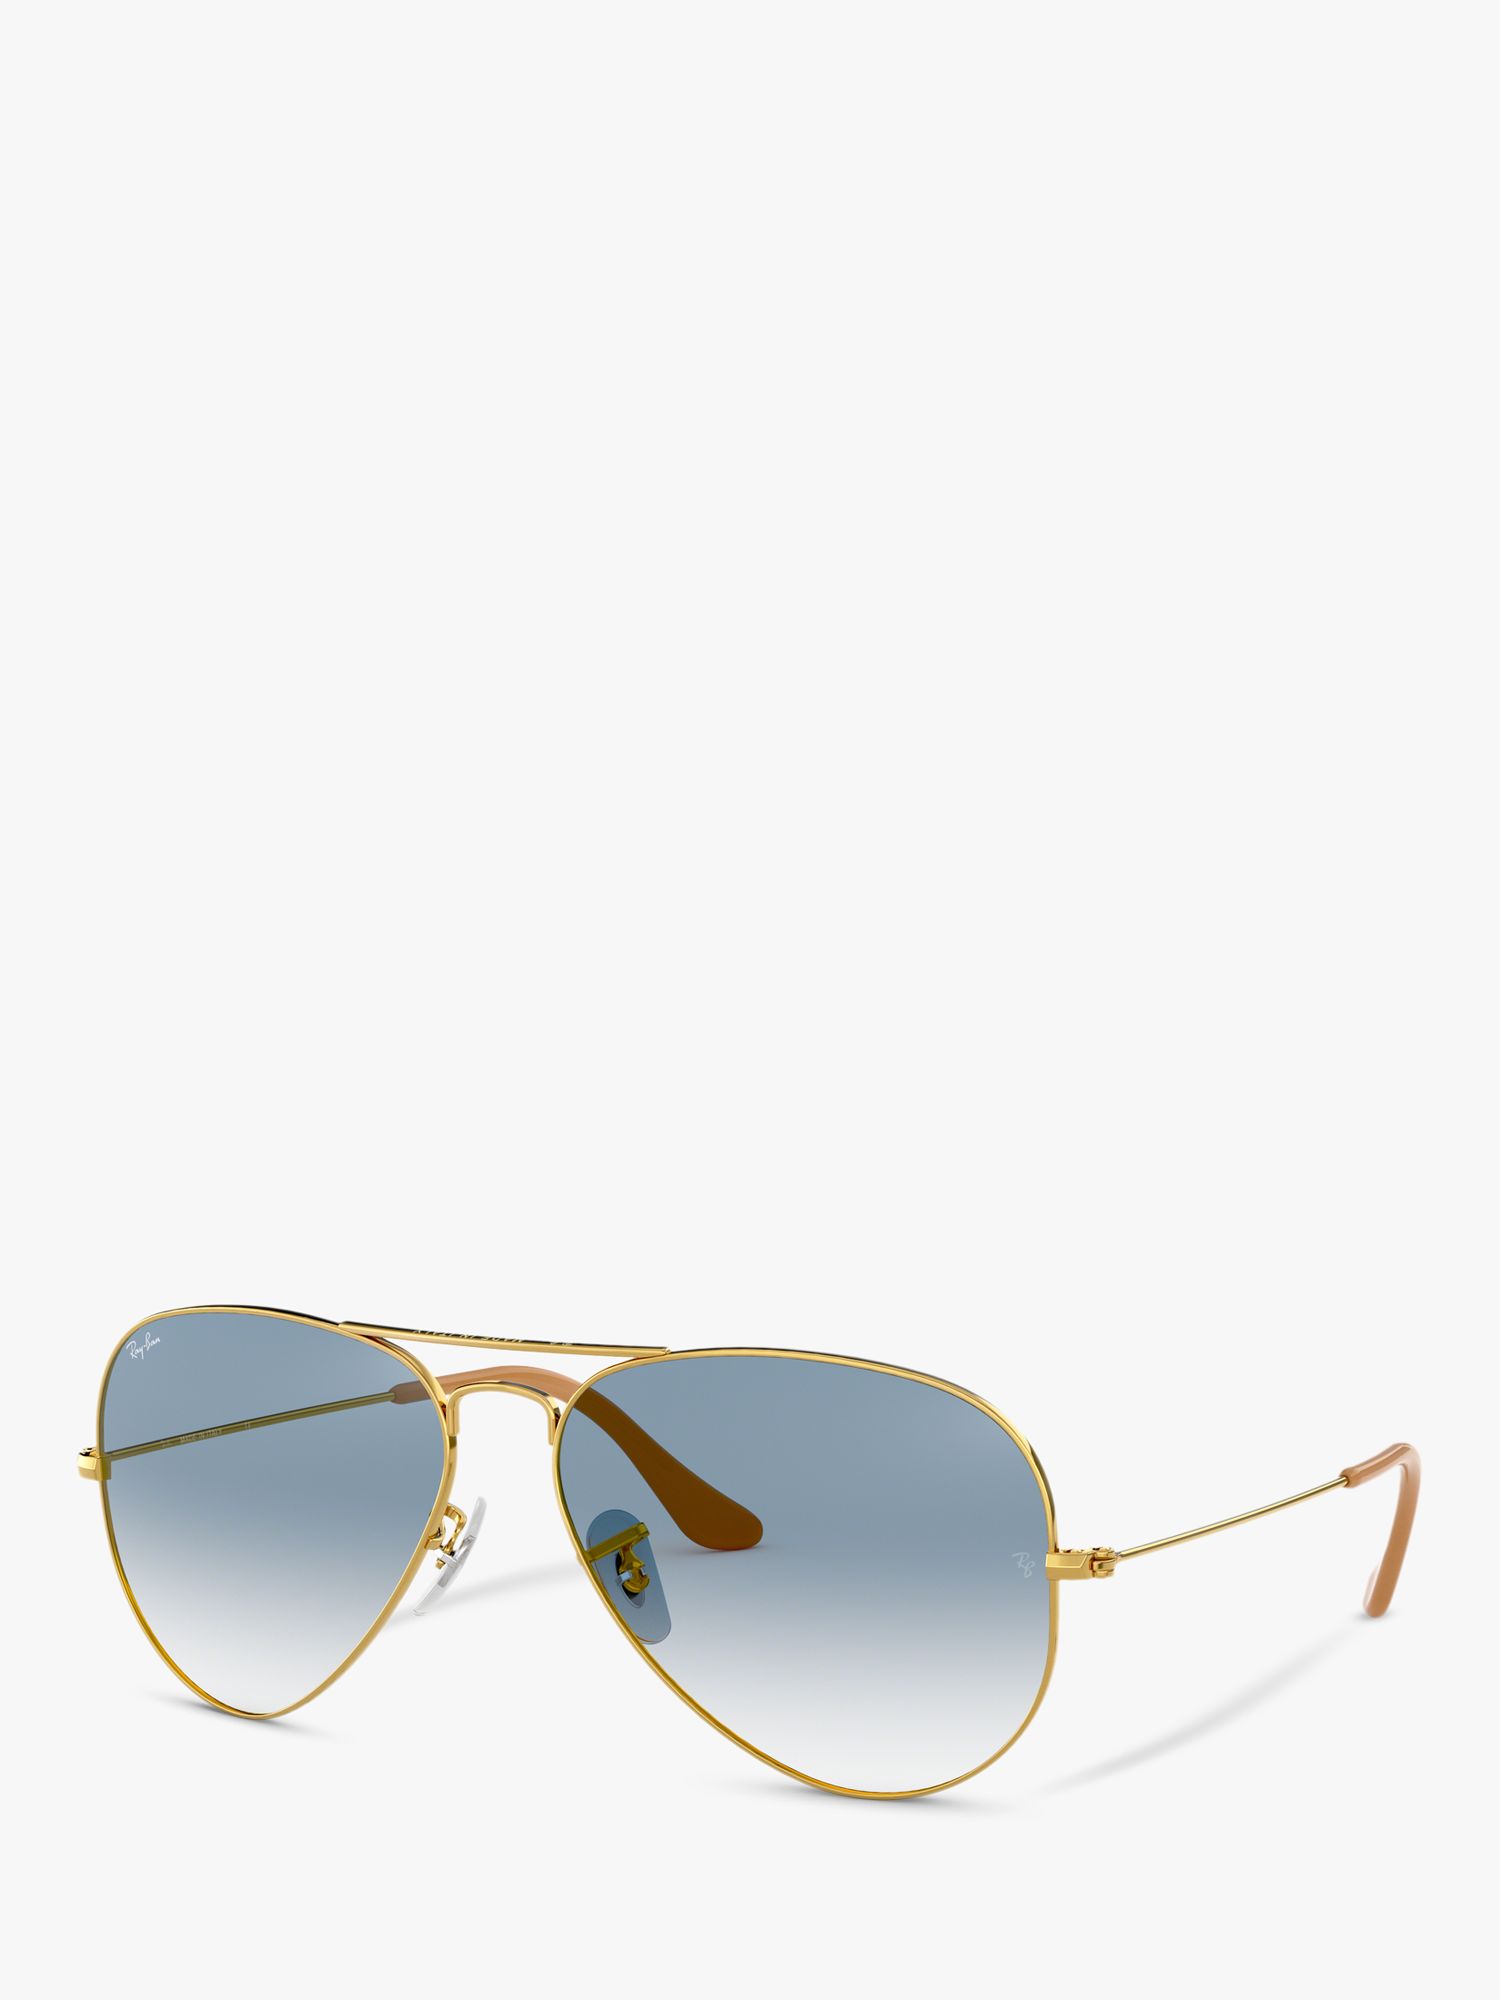 Ray-Ban RB3025 Men's Original Aviator Sunglasses, Gold/Blue Gradient at  John Lewis & Partners